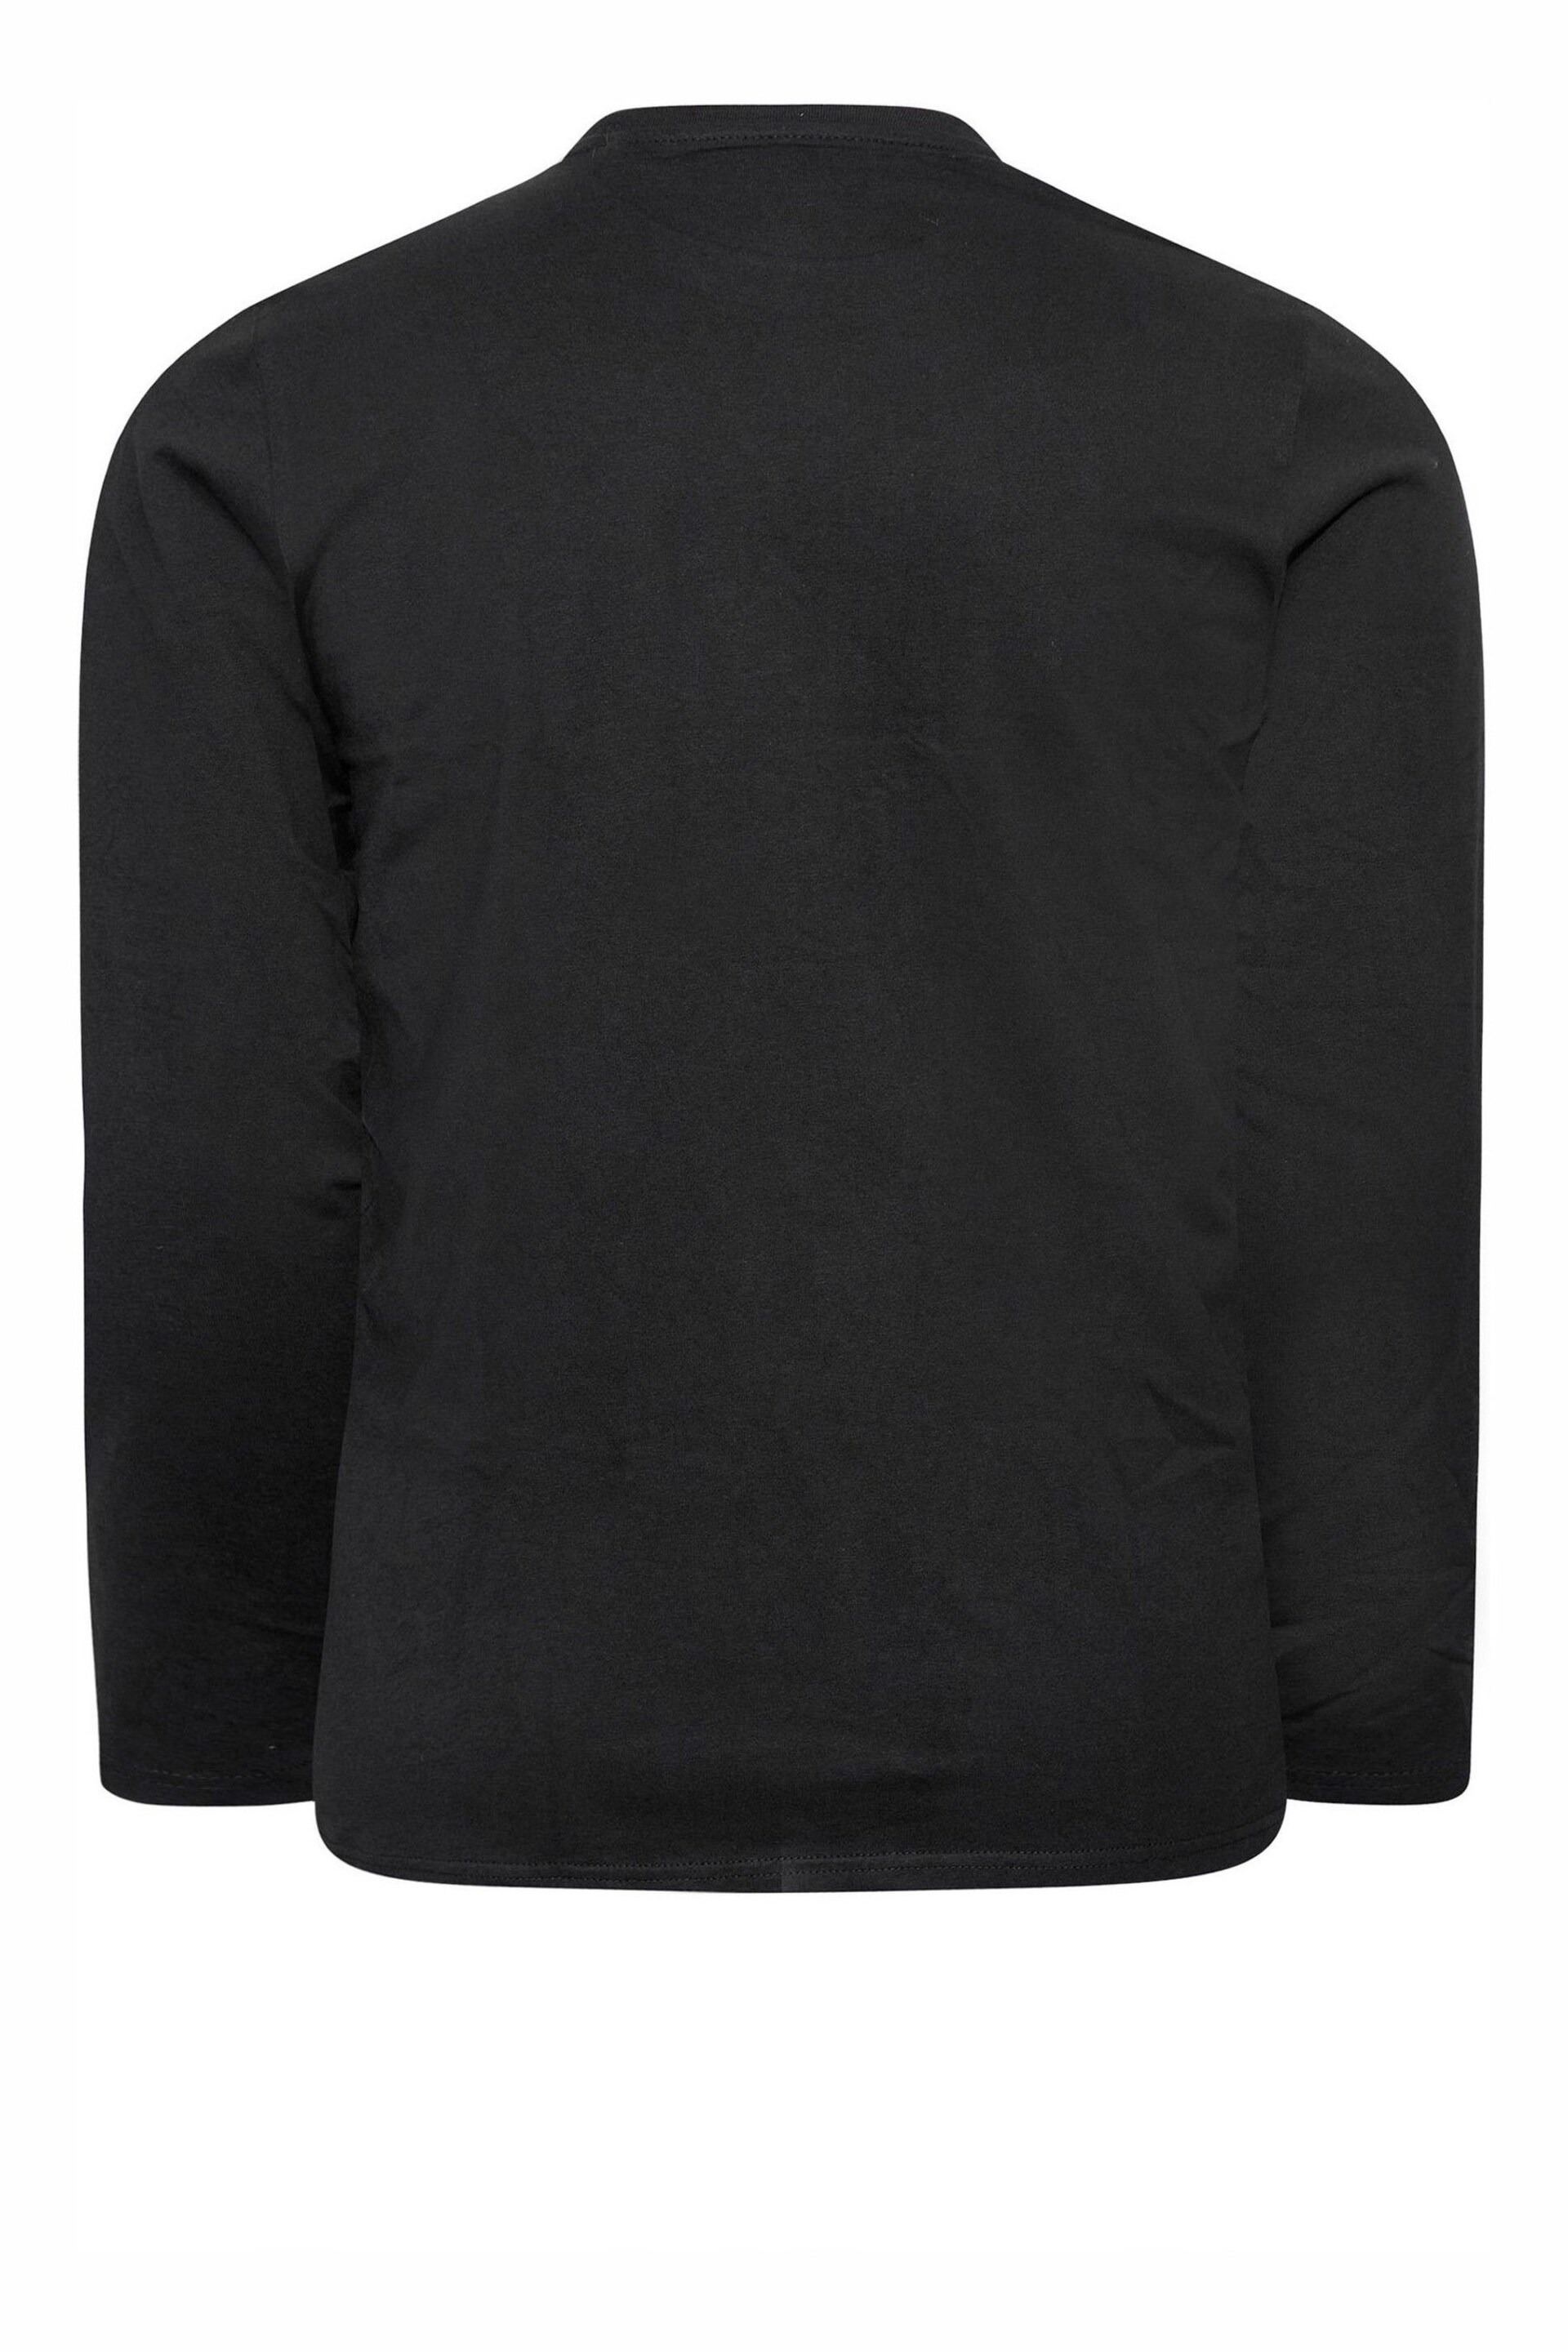 BadRhino Big & Tall Black 3 Pack Long Sleeve T-Shirts - Image 4 of 5